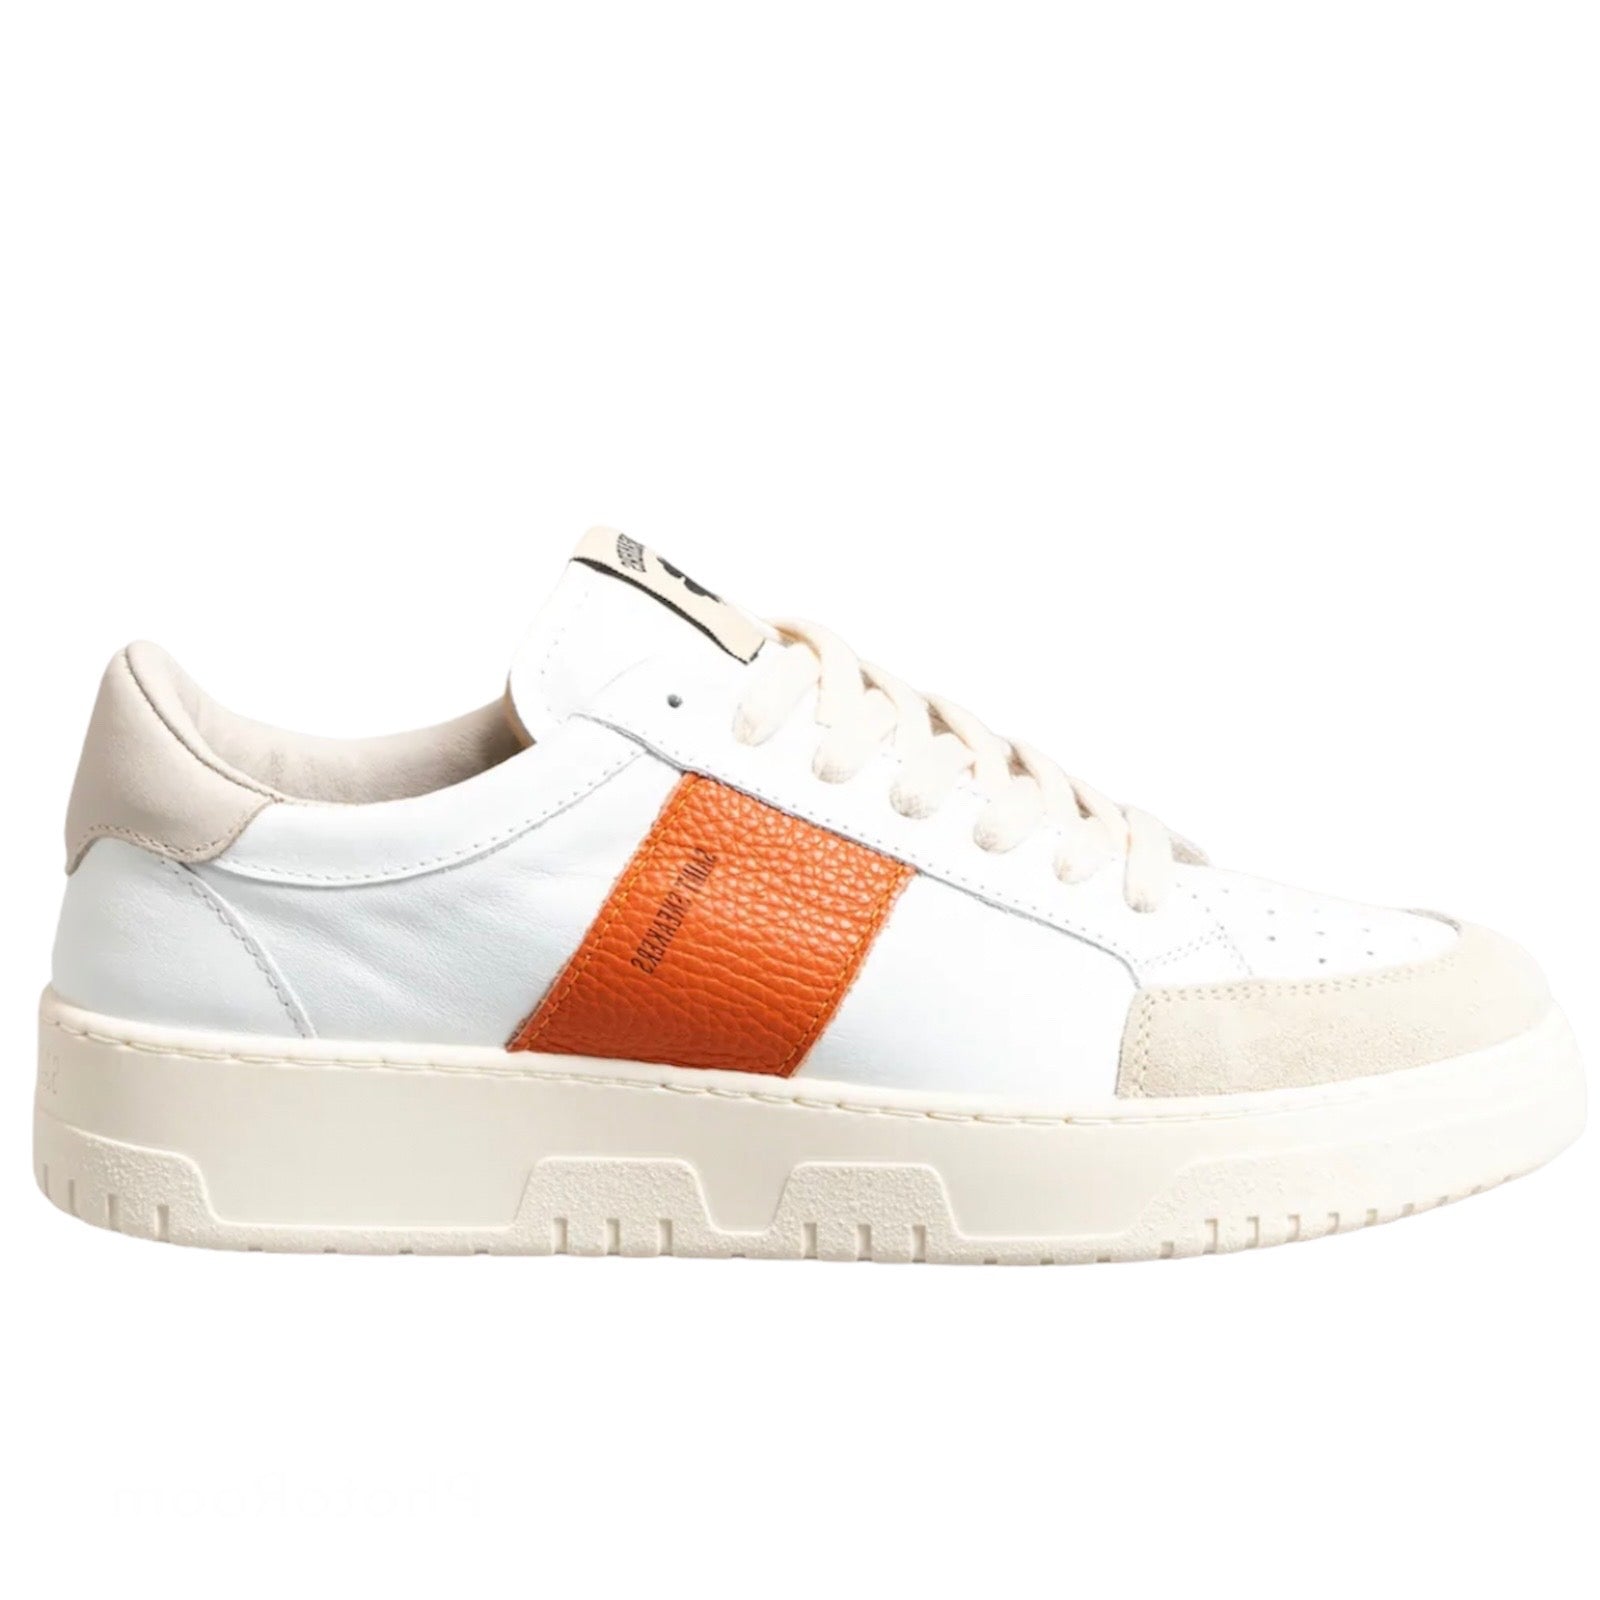 Sneakers SAINT SNEAKERS Sail
Bianco/arancio